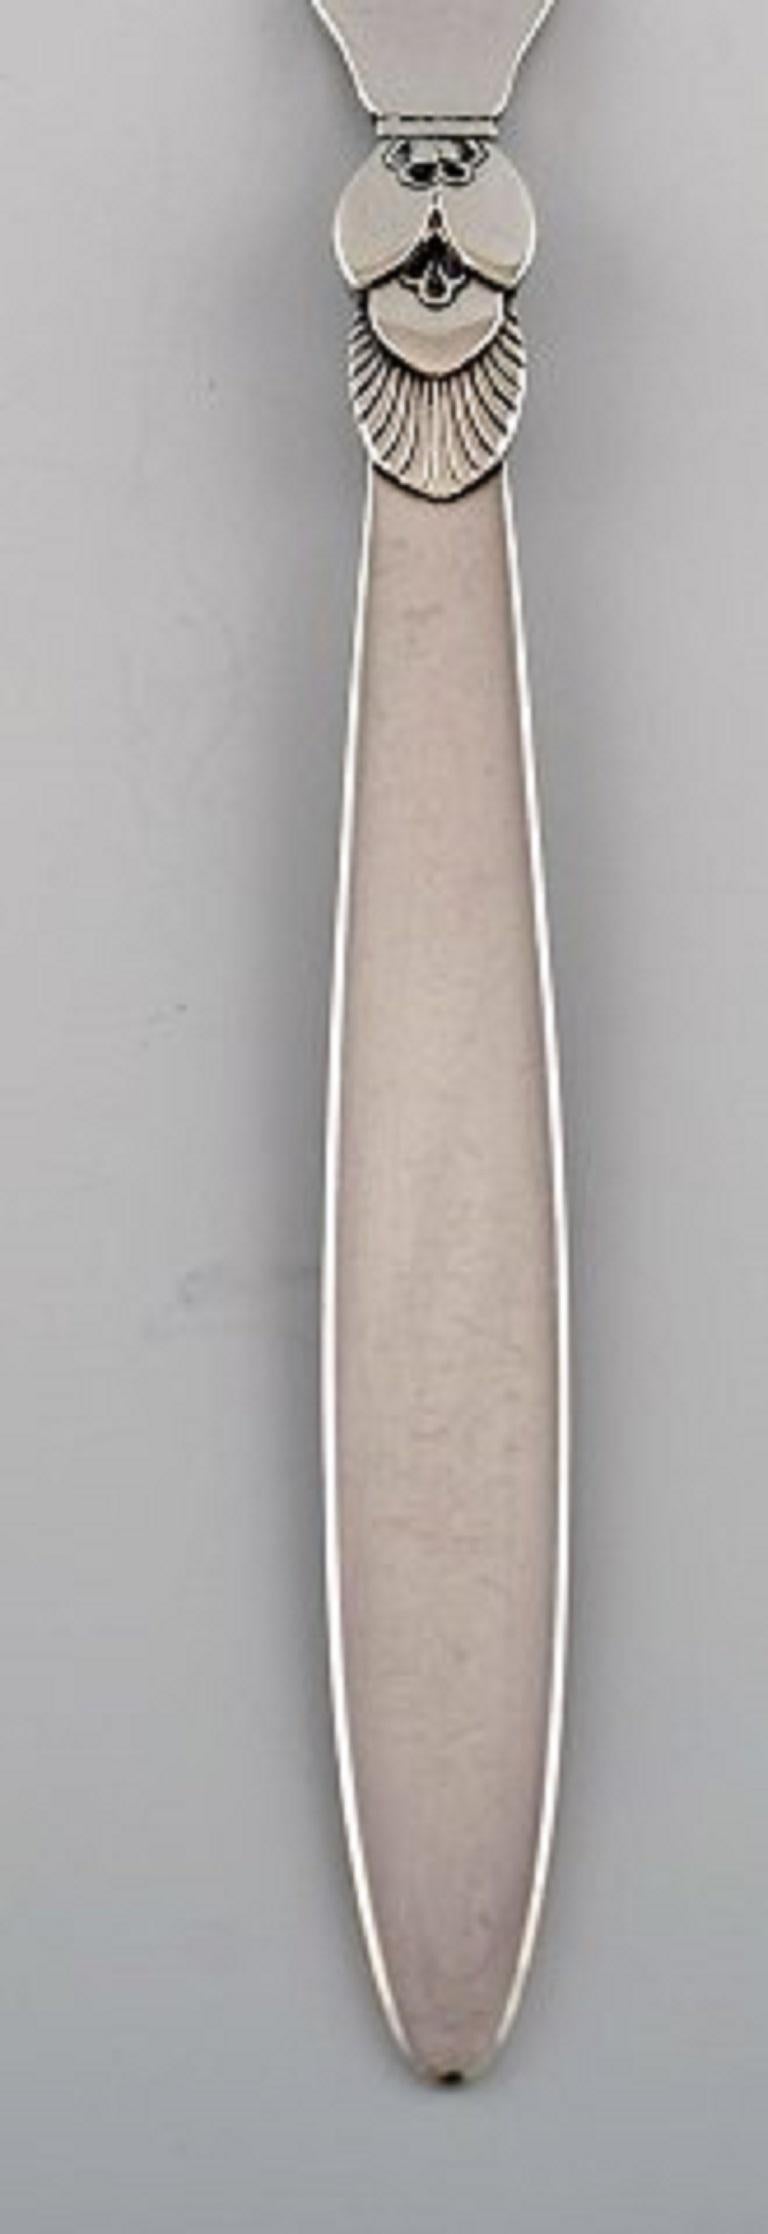 Georg Jensen Cactus meat fork in sterling silver.
Designer: Gundorph Albertus.
Measures: 19.5 cm.
Stamped.
In very good condition.